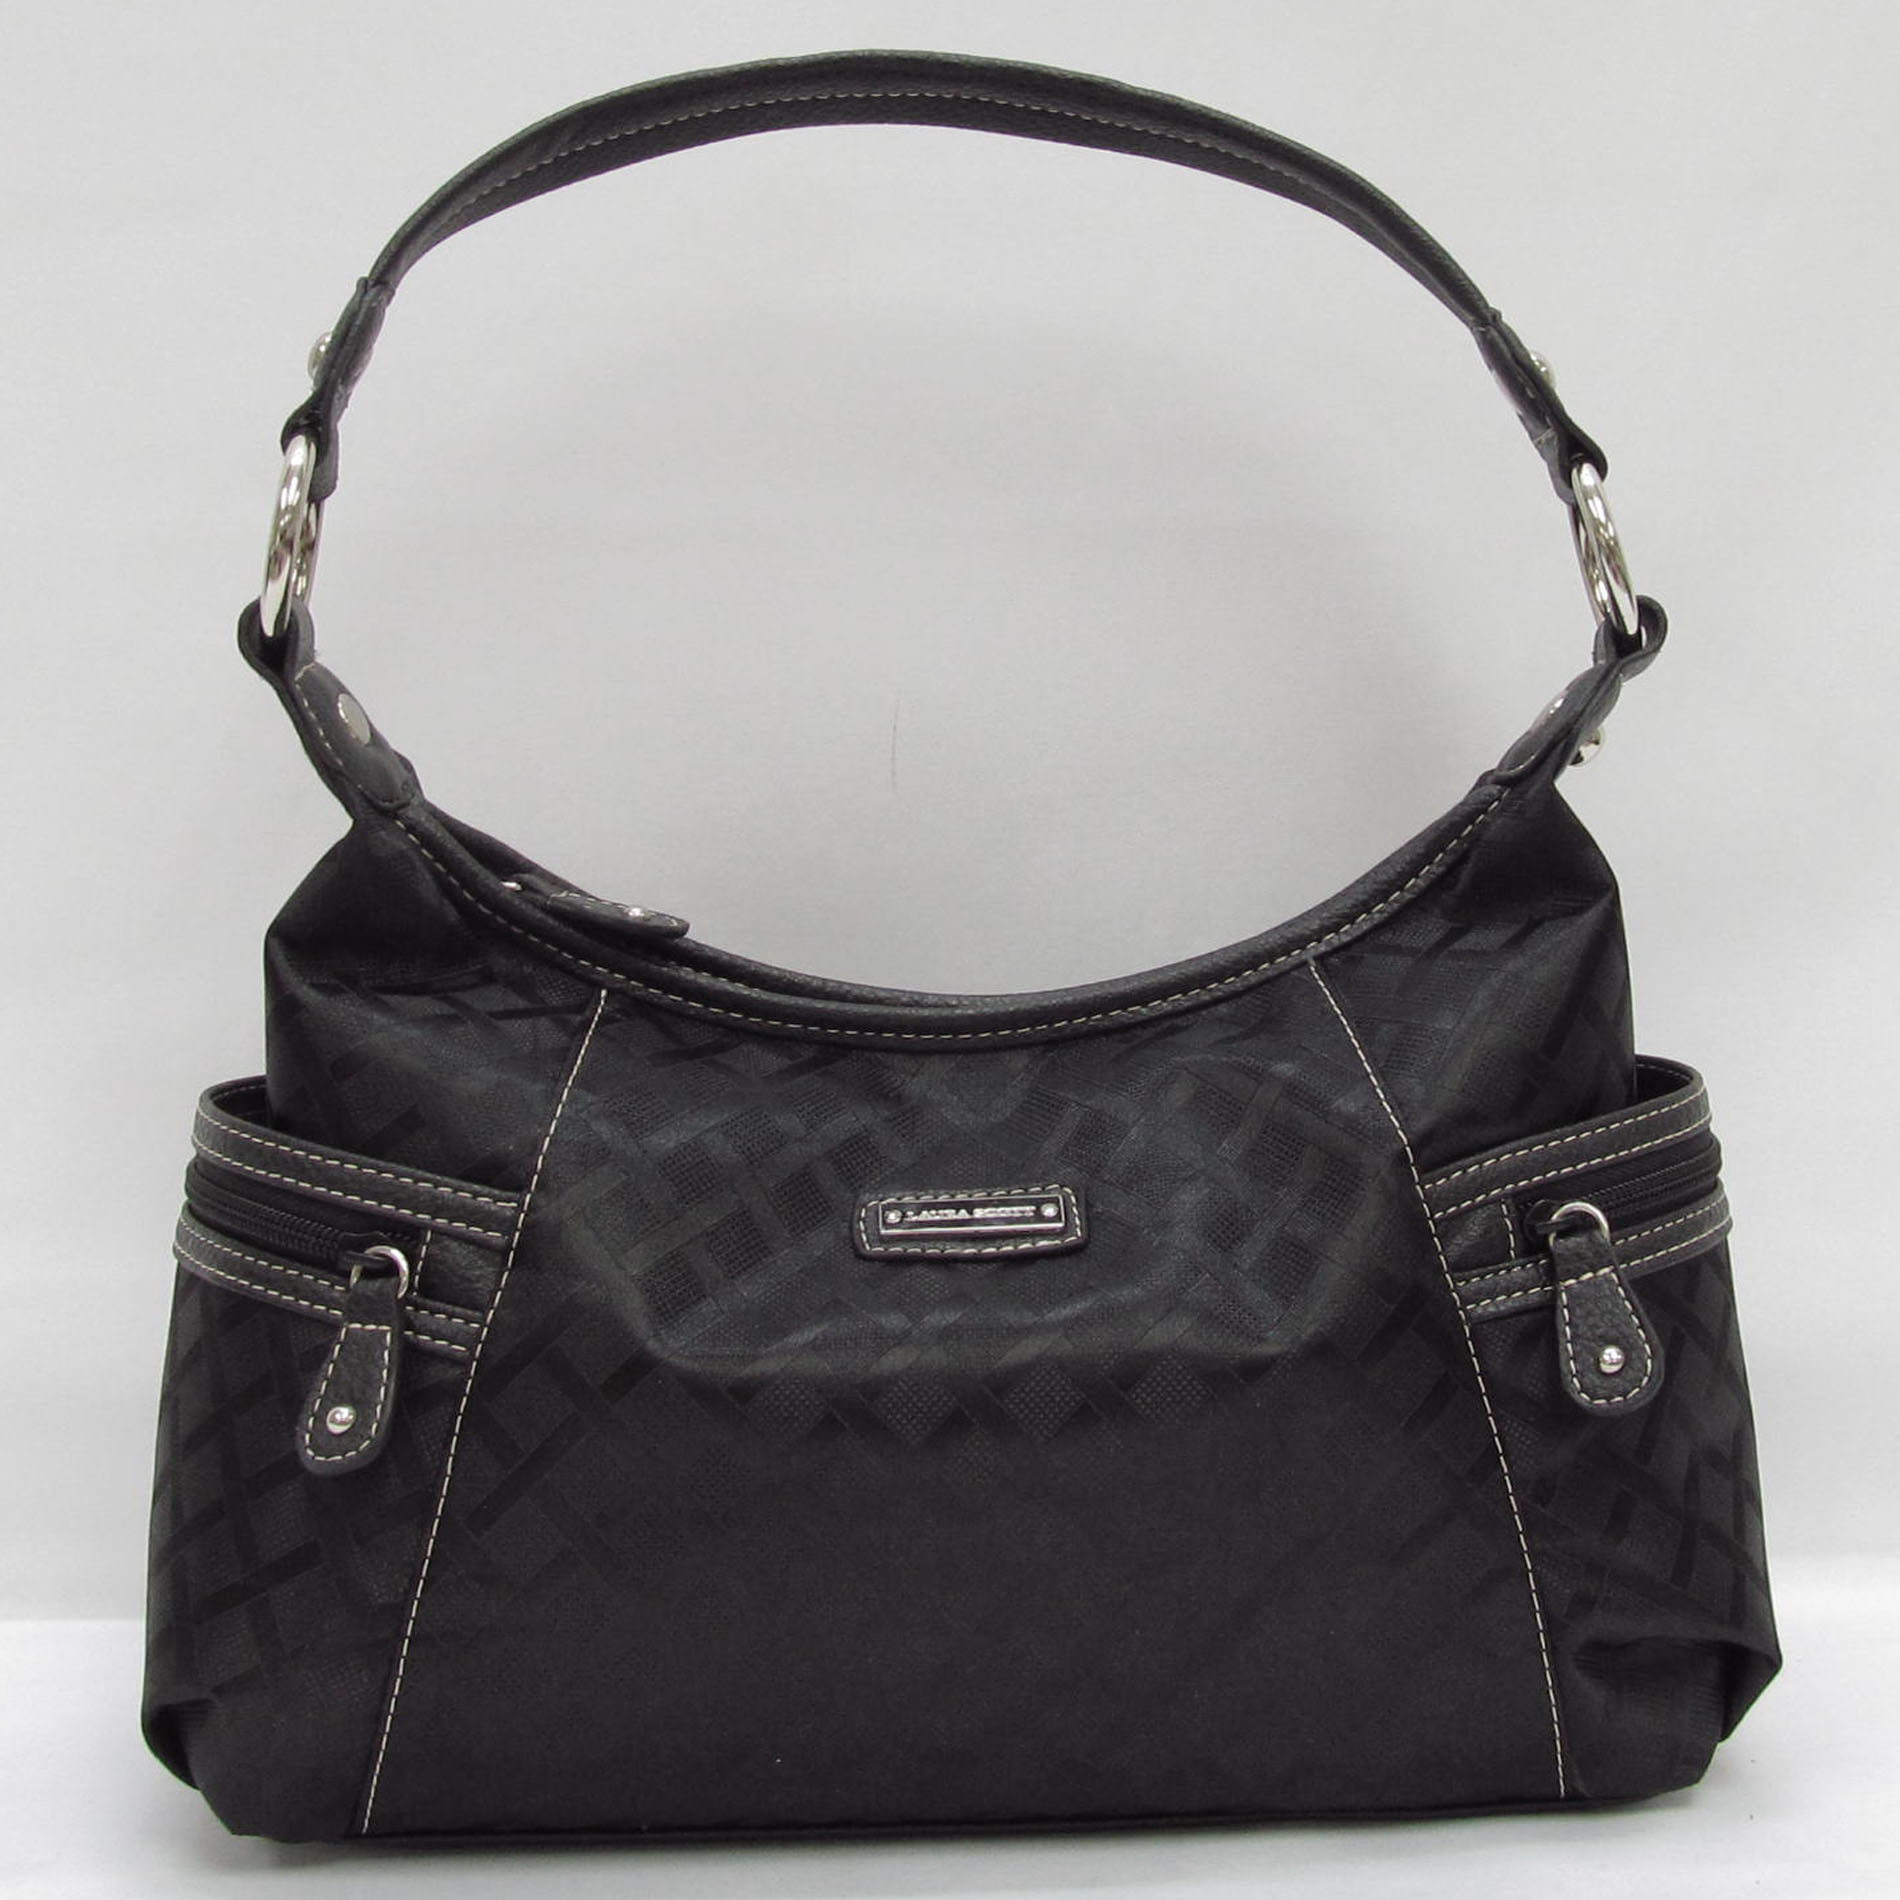 Laura Scott Women's Nova Satchel Handbag